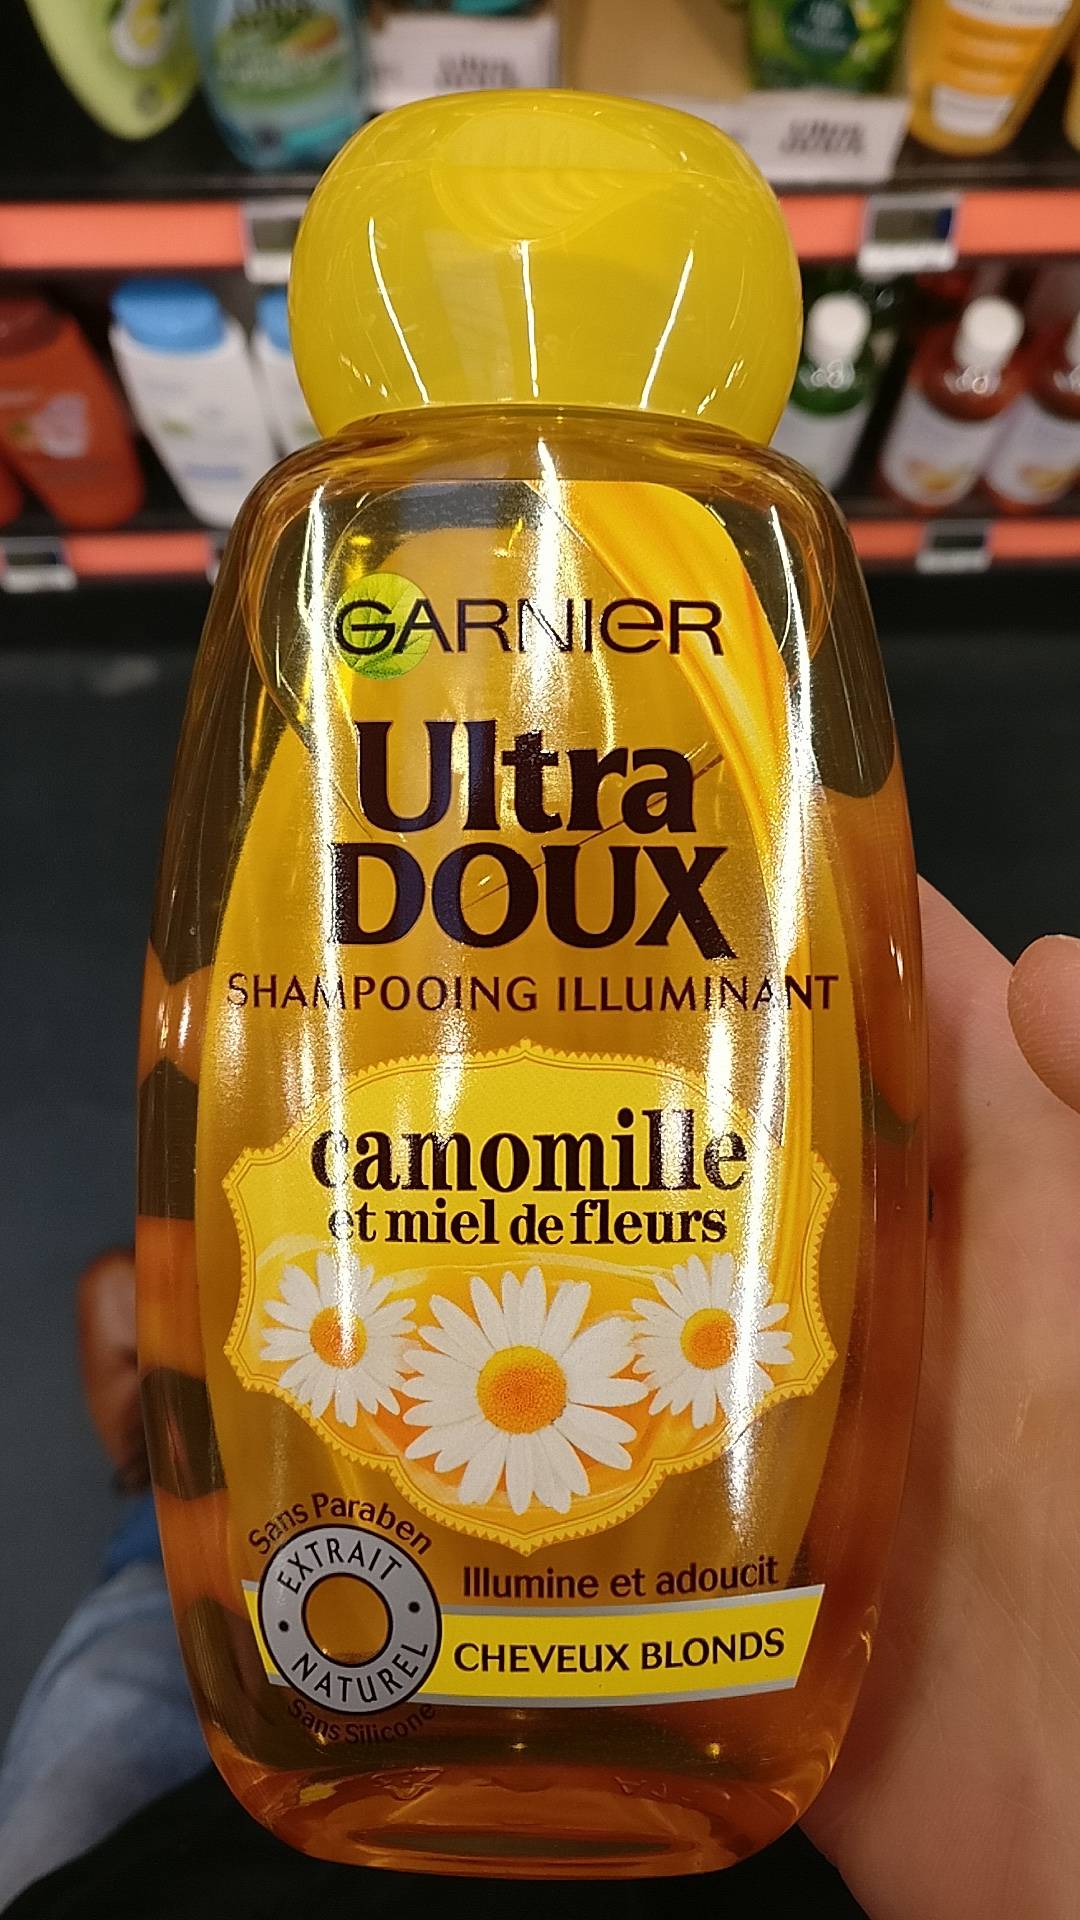 GARNIER - Ultra doux Camomille et miel de fleurs - Shampooing 